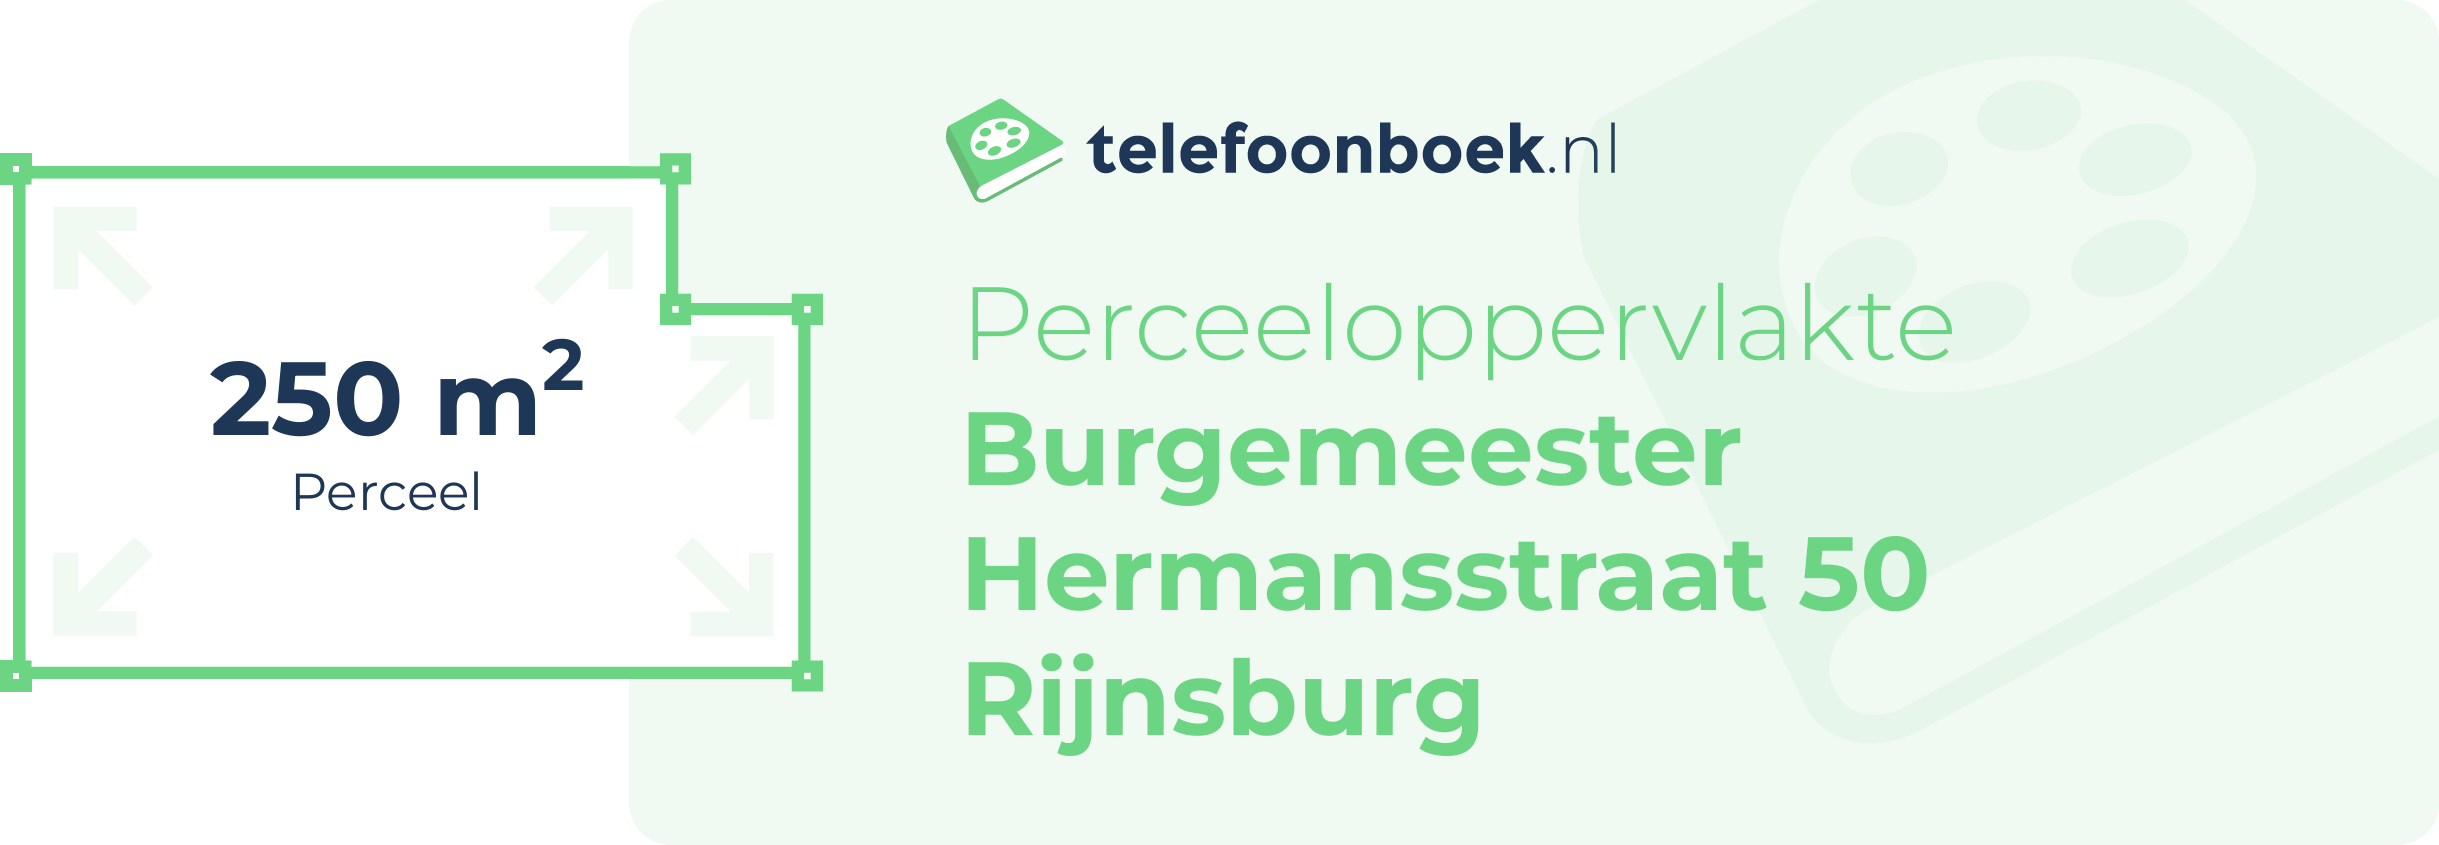 Perceeloppervlakte Burgemeester Hermansstraat 50 Rijnsburg